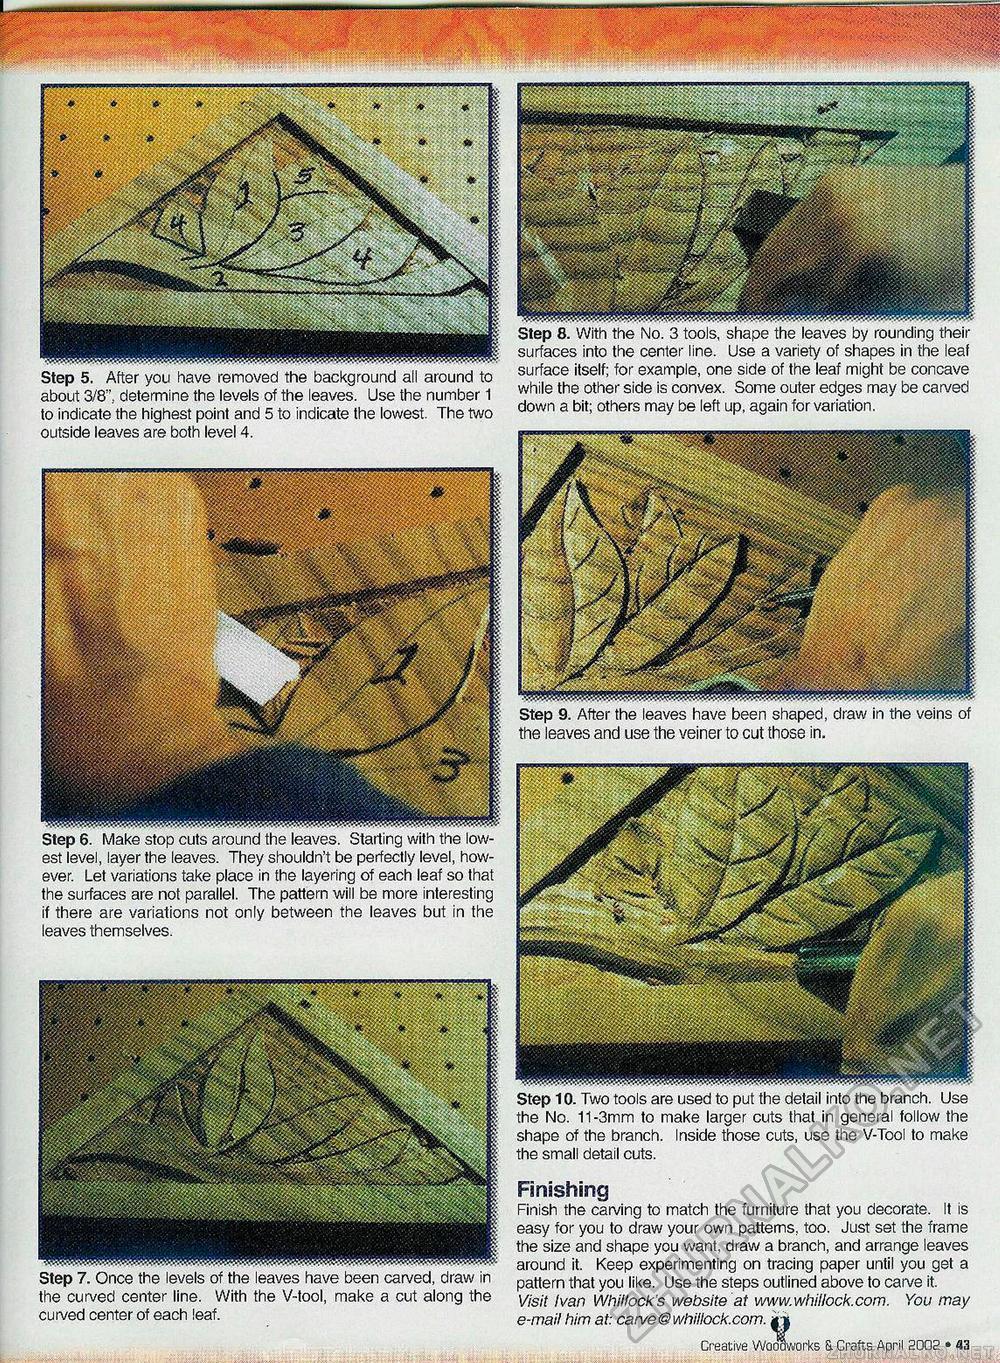 Creative Woodworks & crafts 2002-04,  43